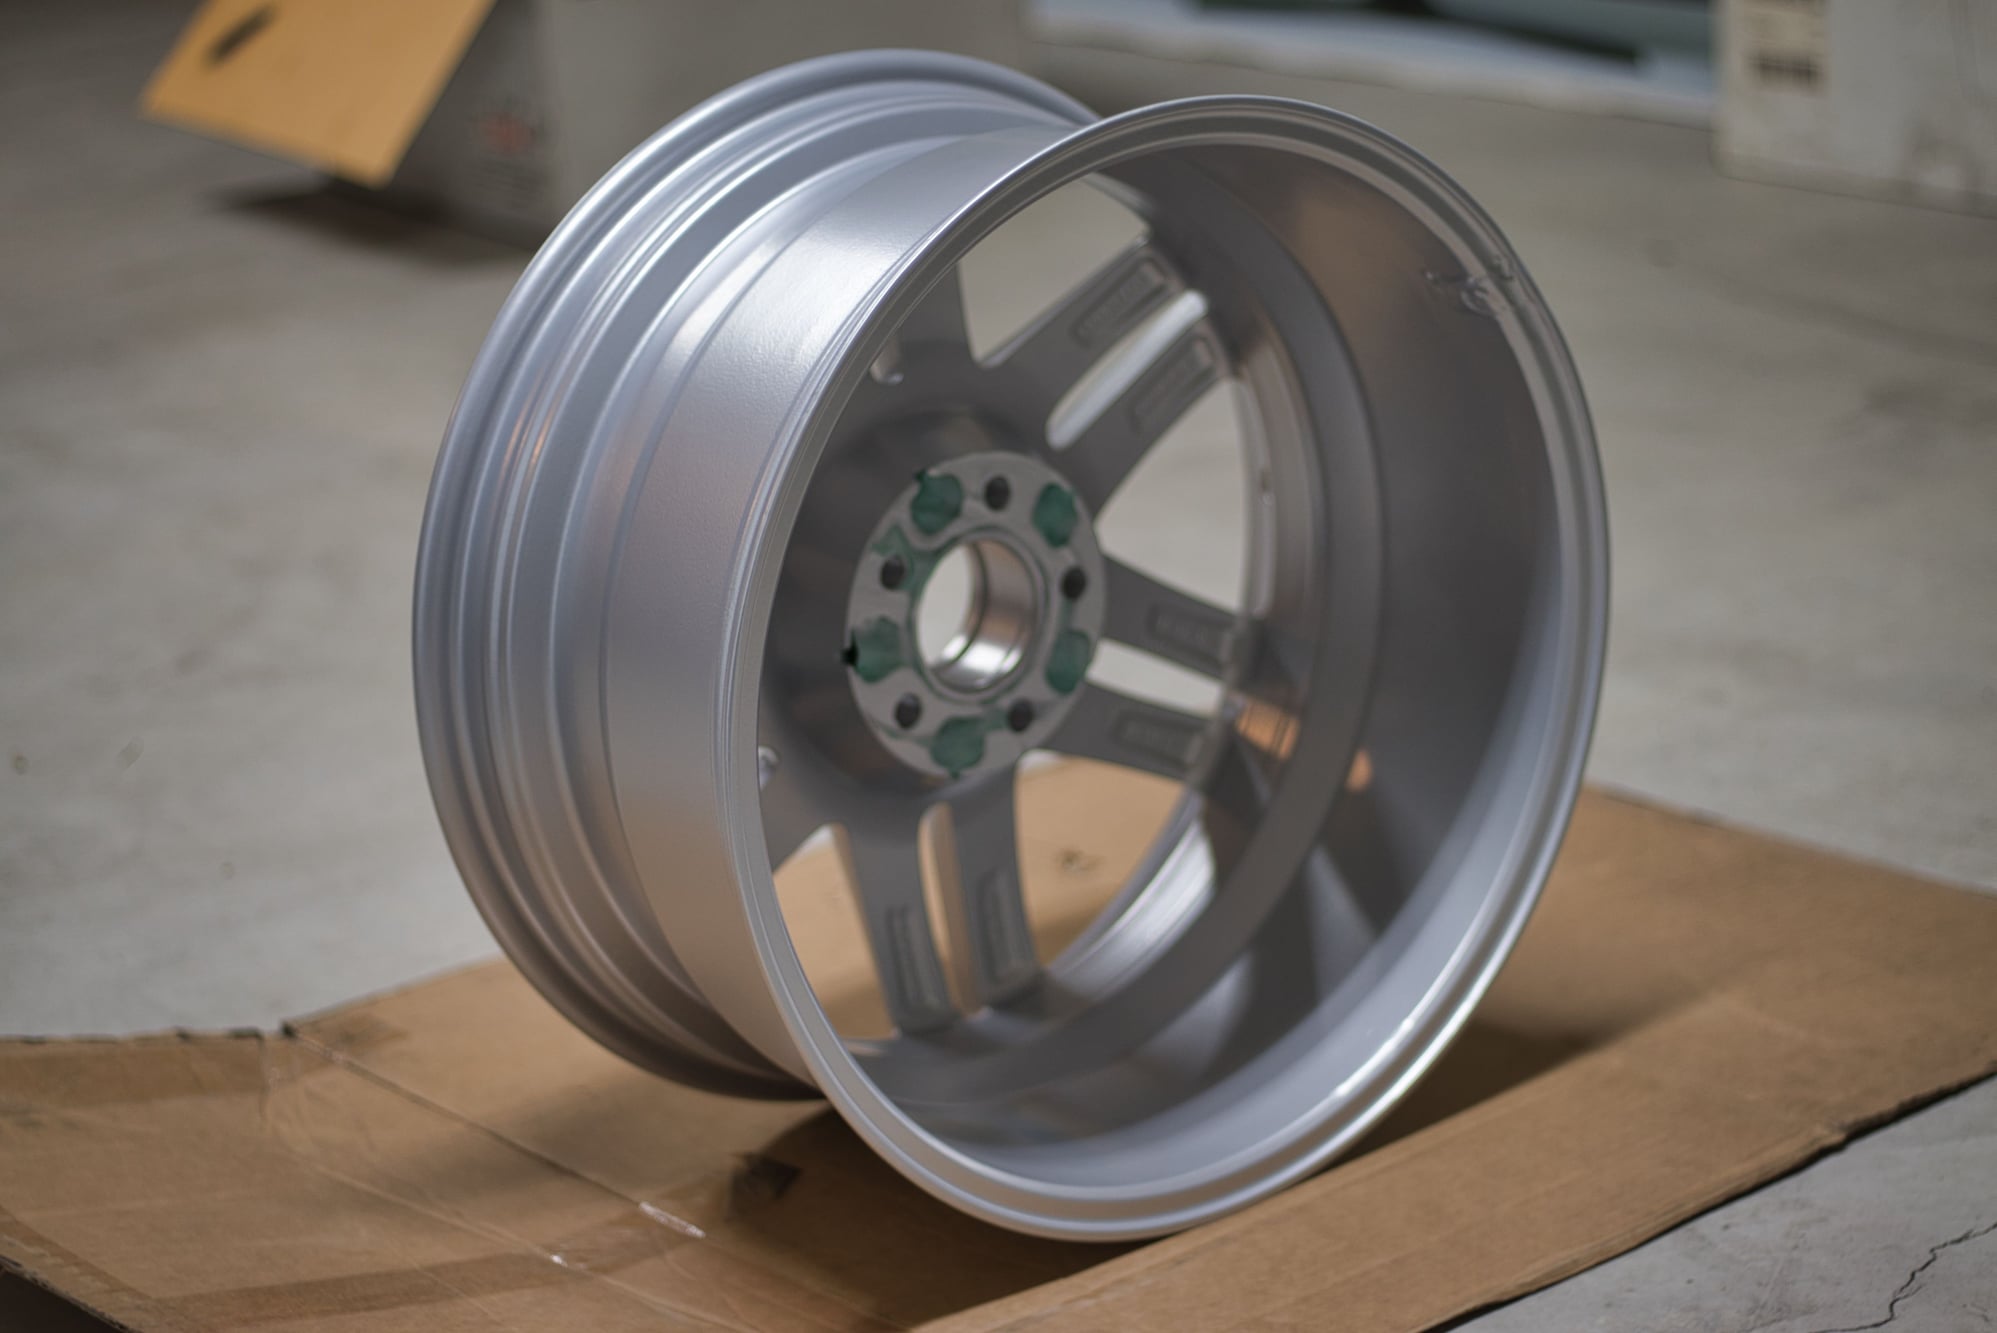 Wheels and Tires/Axles - Authentic Brabus Monoblock VI (6) 1-Piece Wheels 5x112 18x8.5 et35 - New - Torrance, CA 90501, United States